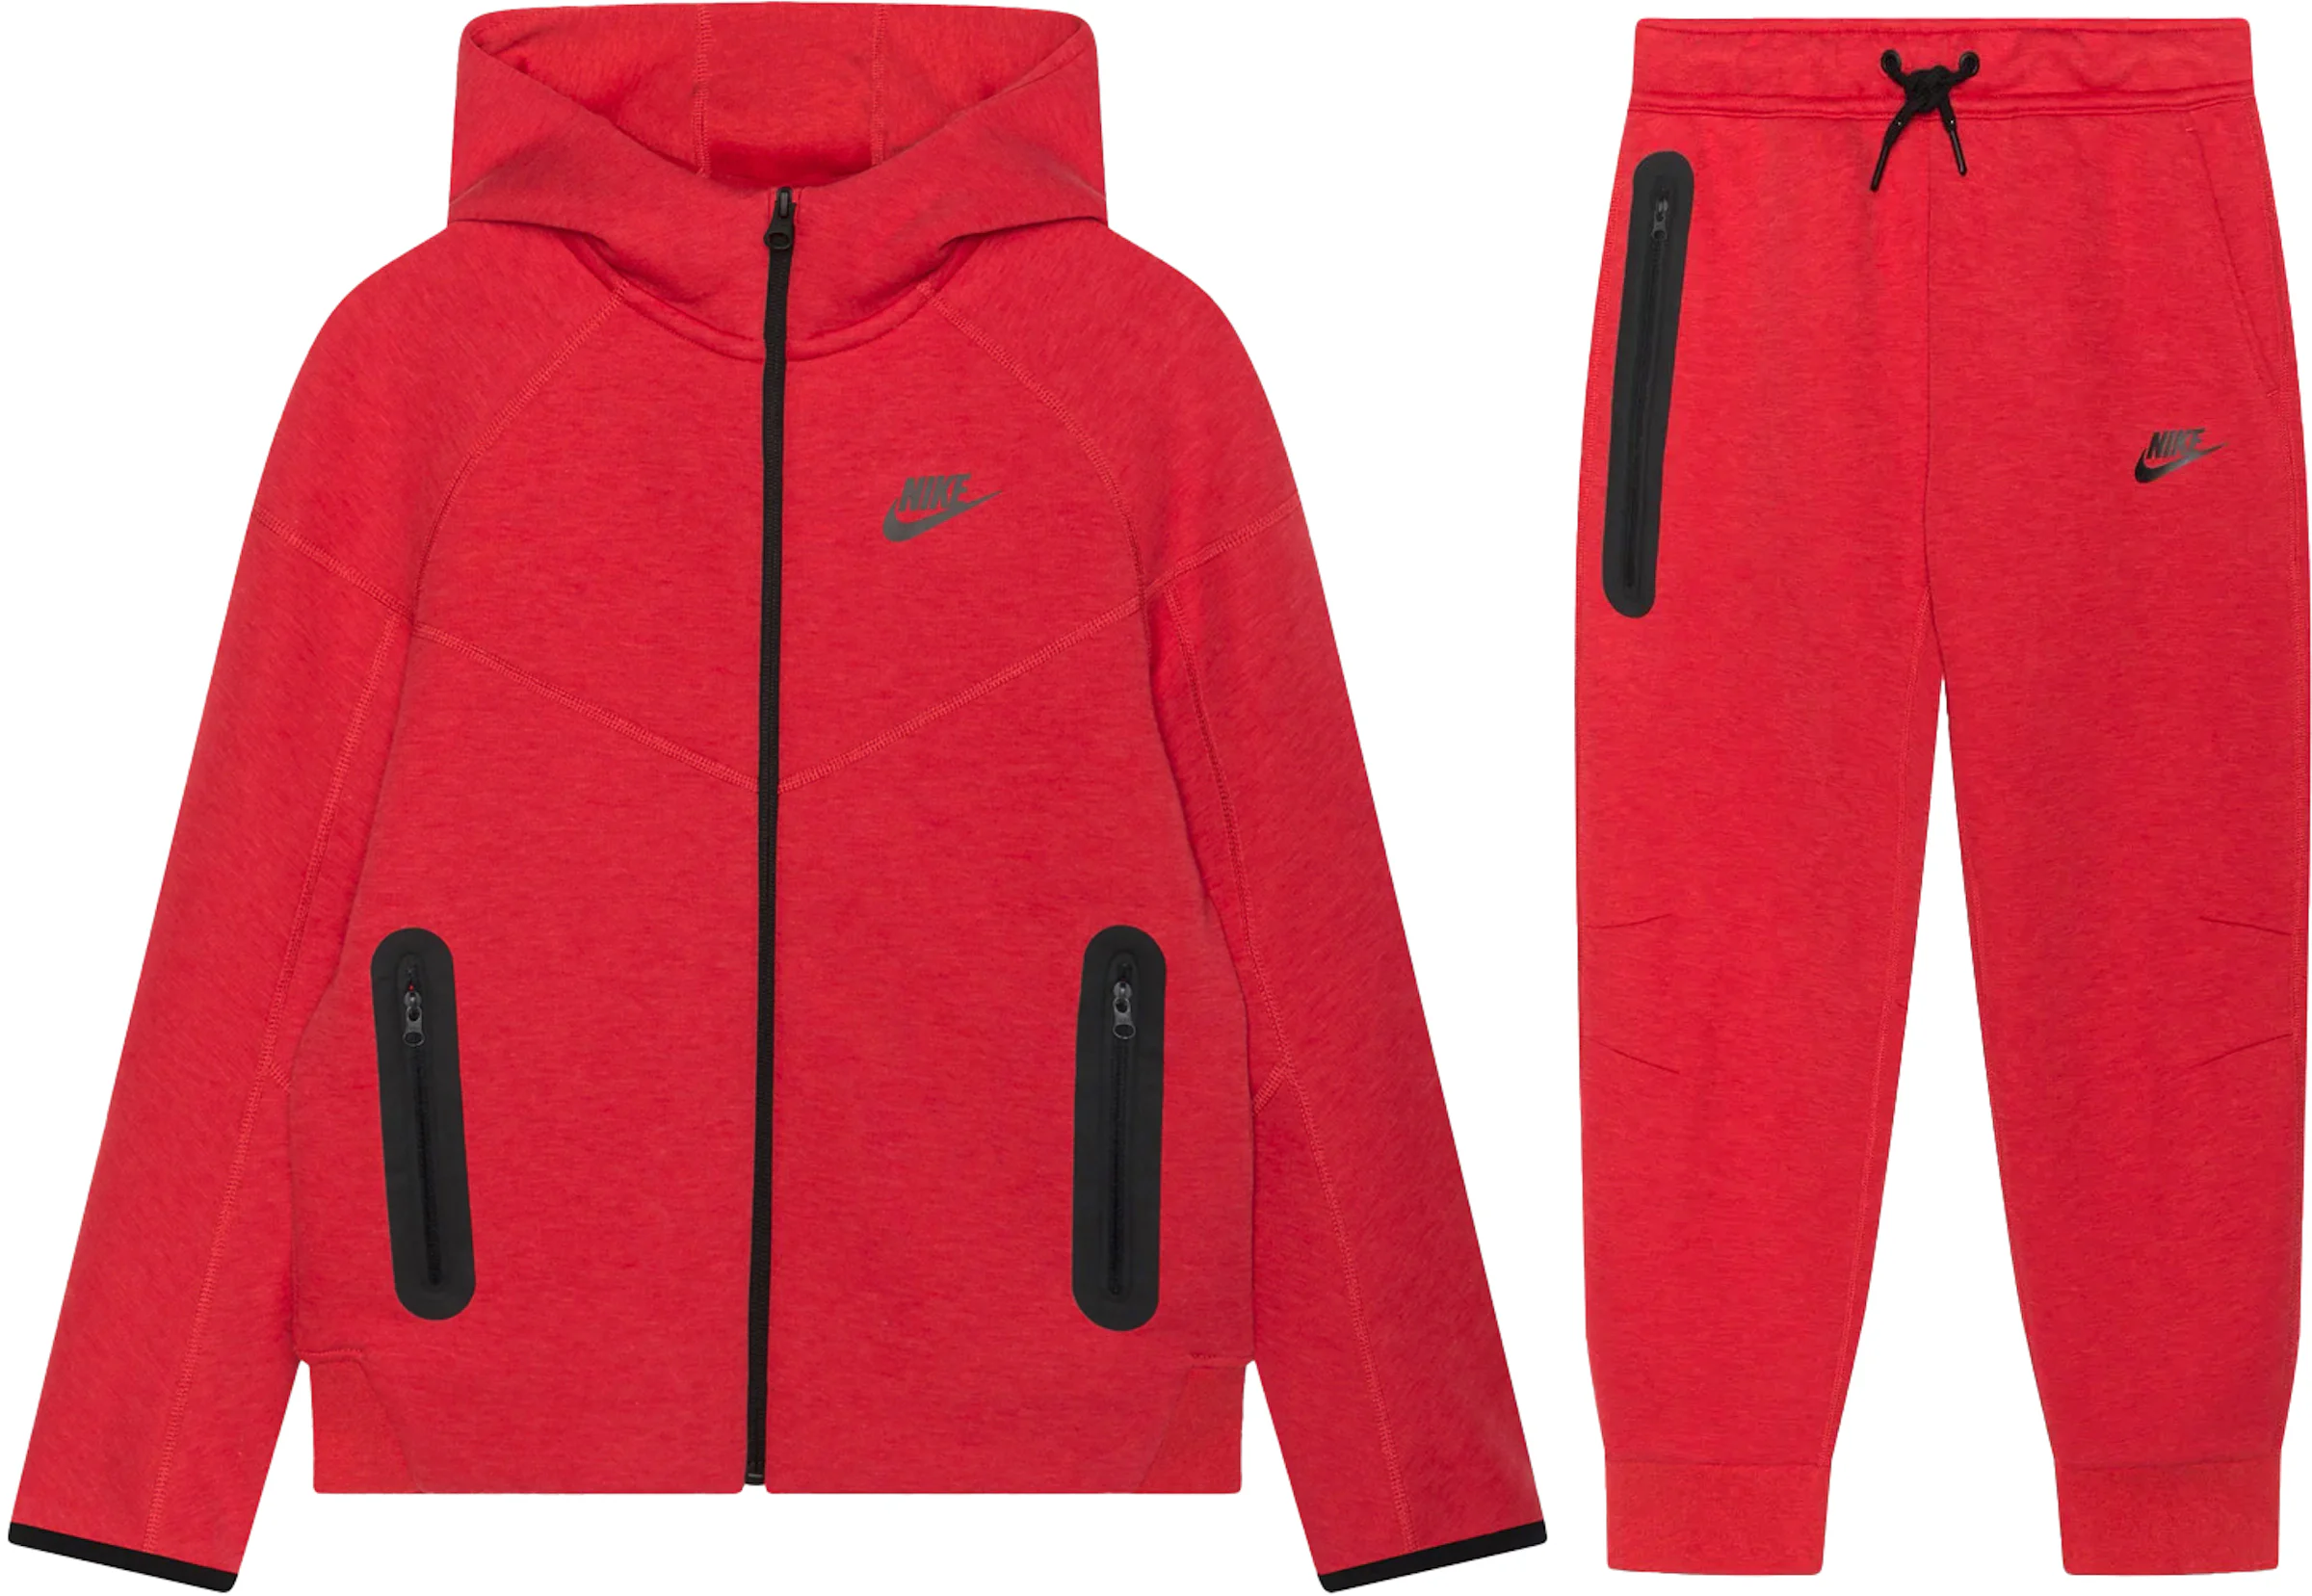 https://images.stockx.com/images/Nike-Sportswear-Tech-Fleece-Full-Zip-Hoodie-Joggers-Set-Light-University-Red-Heather-Black-Black.jpg?fit=fill&bg=FFFFFF&w=1200&h=857&fm=webp&auto=compress&dpr=2&trim=color&updated_at=1694532794&q=60